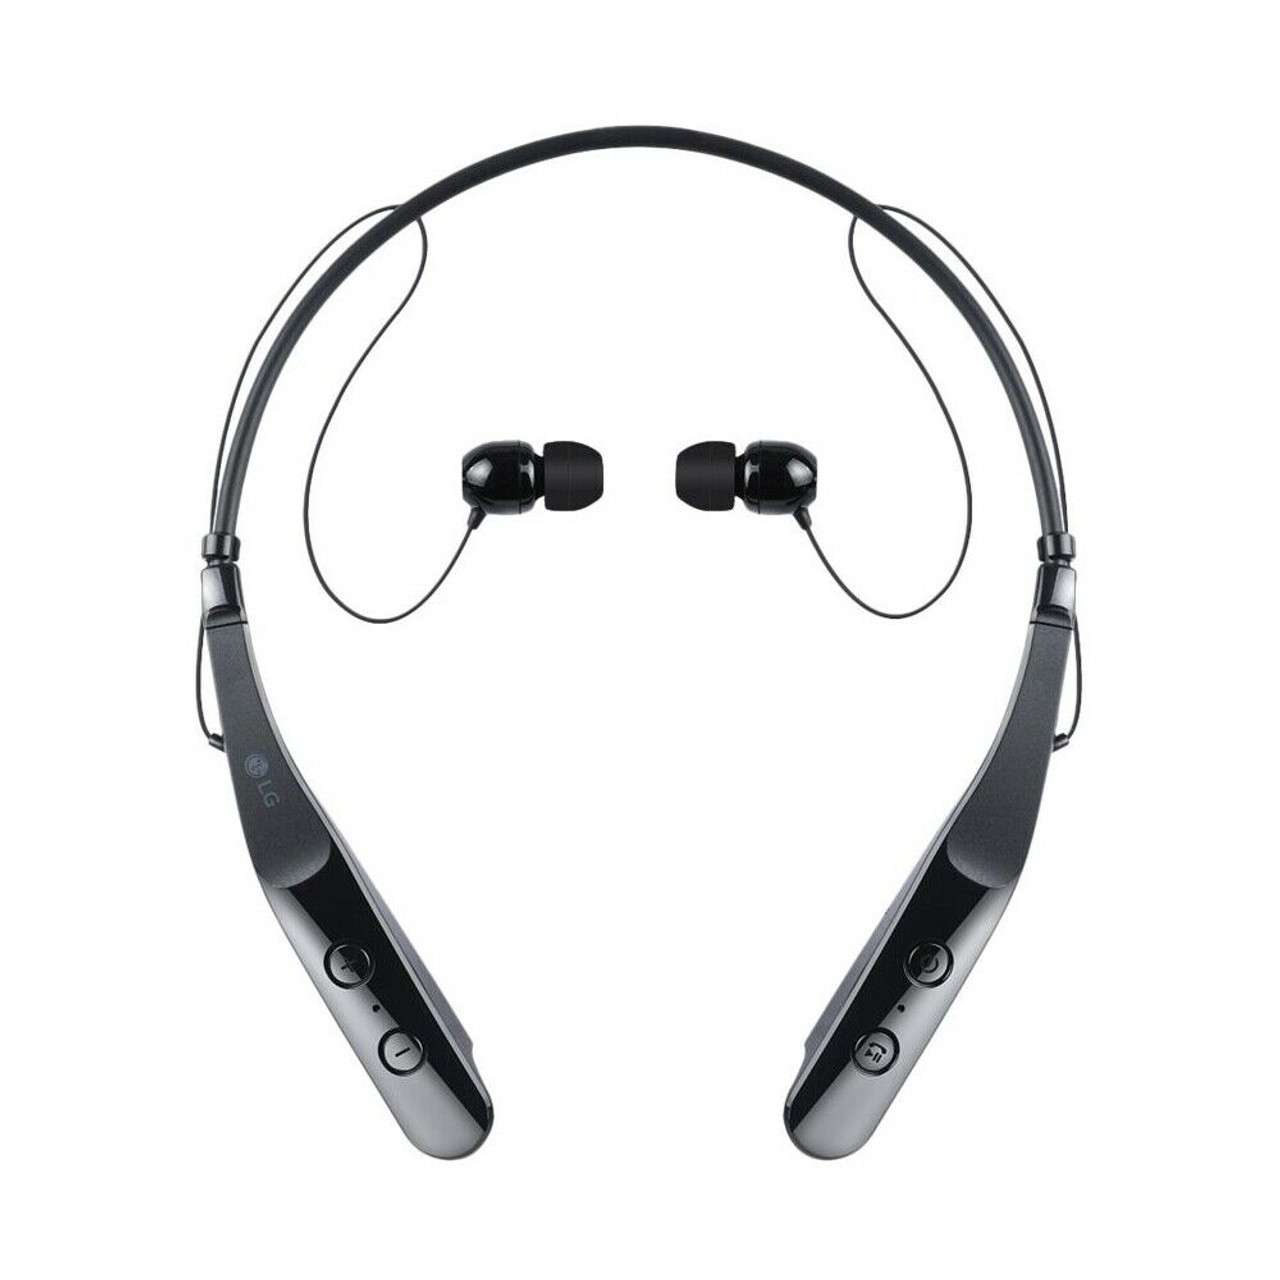 LG Tone Triumph Bluetooth Headset in Black